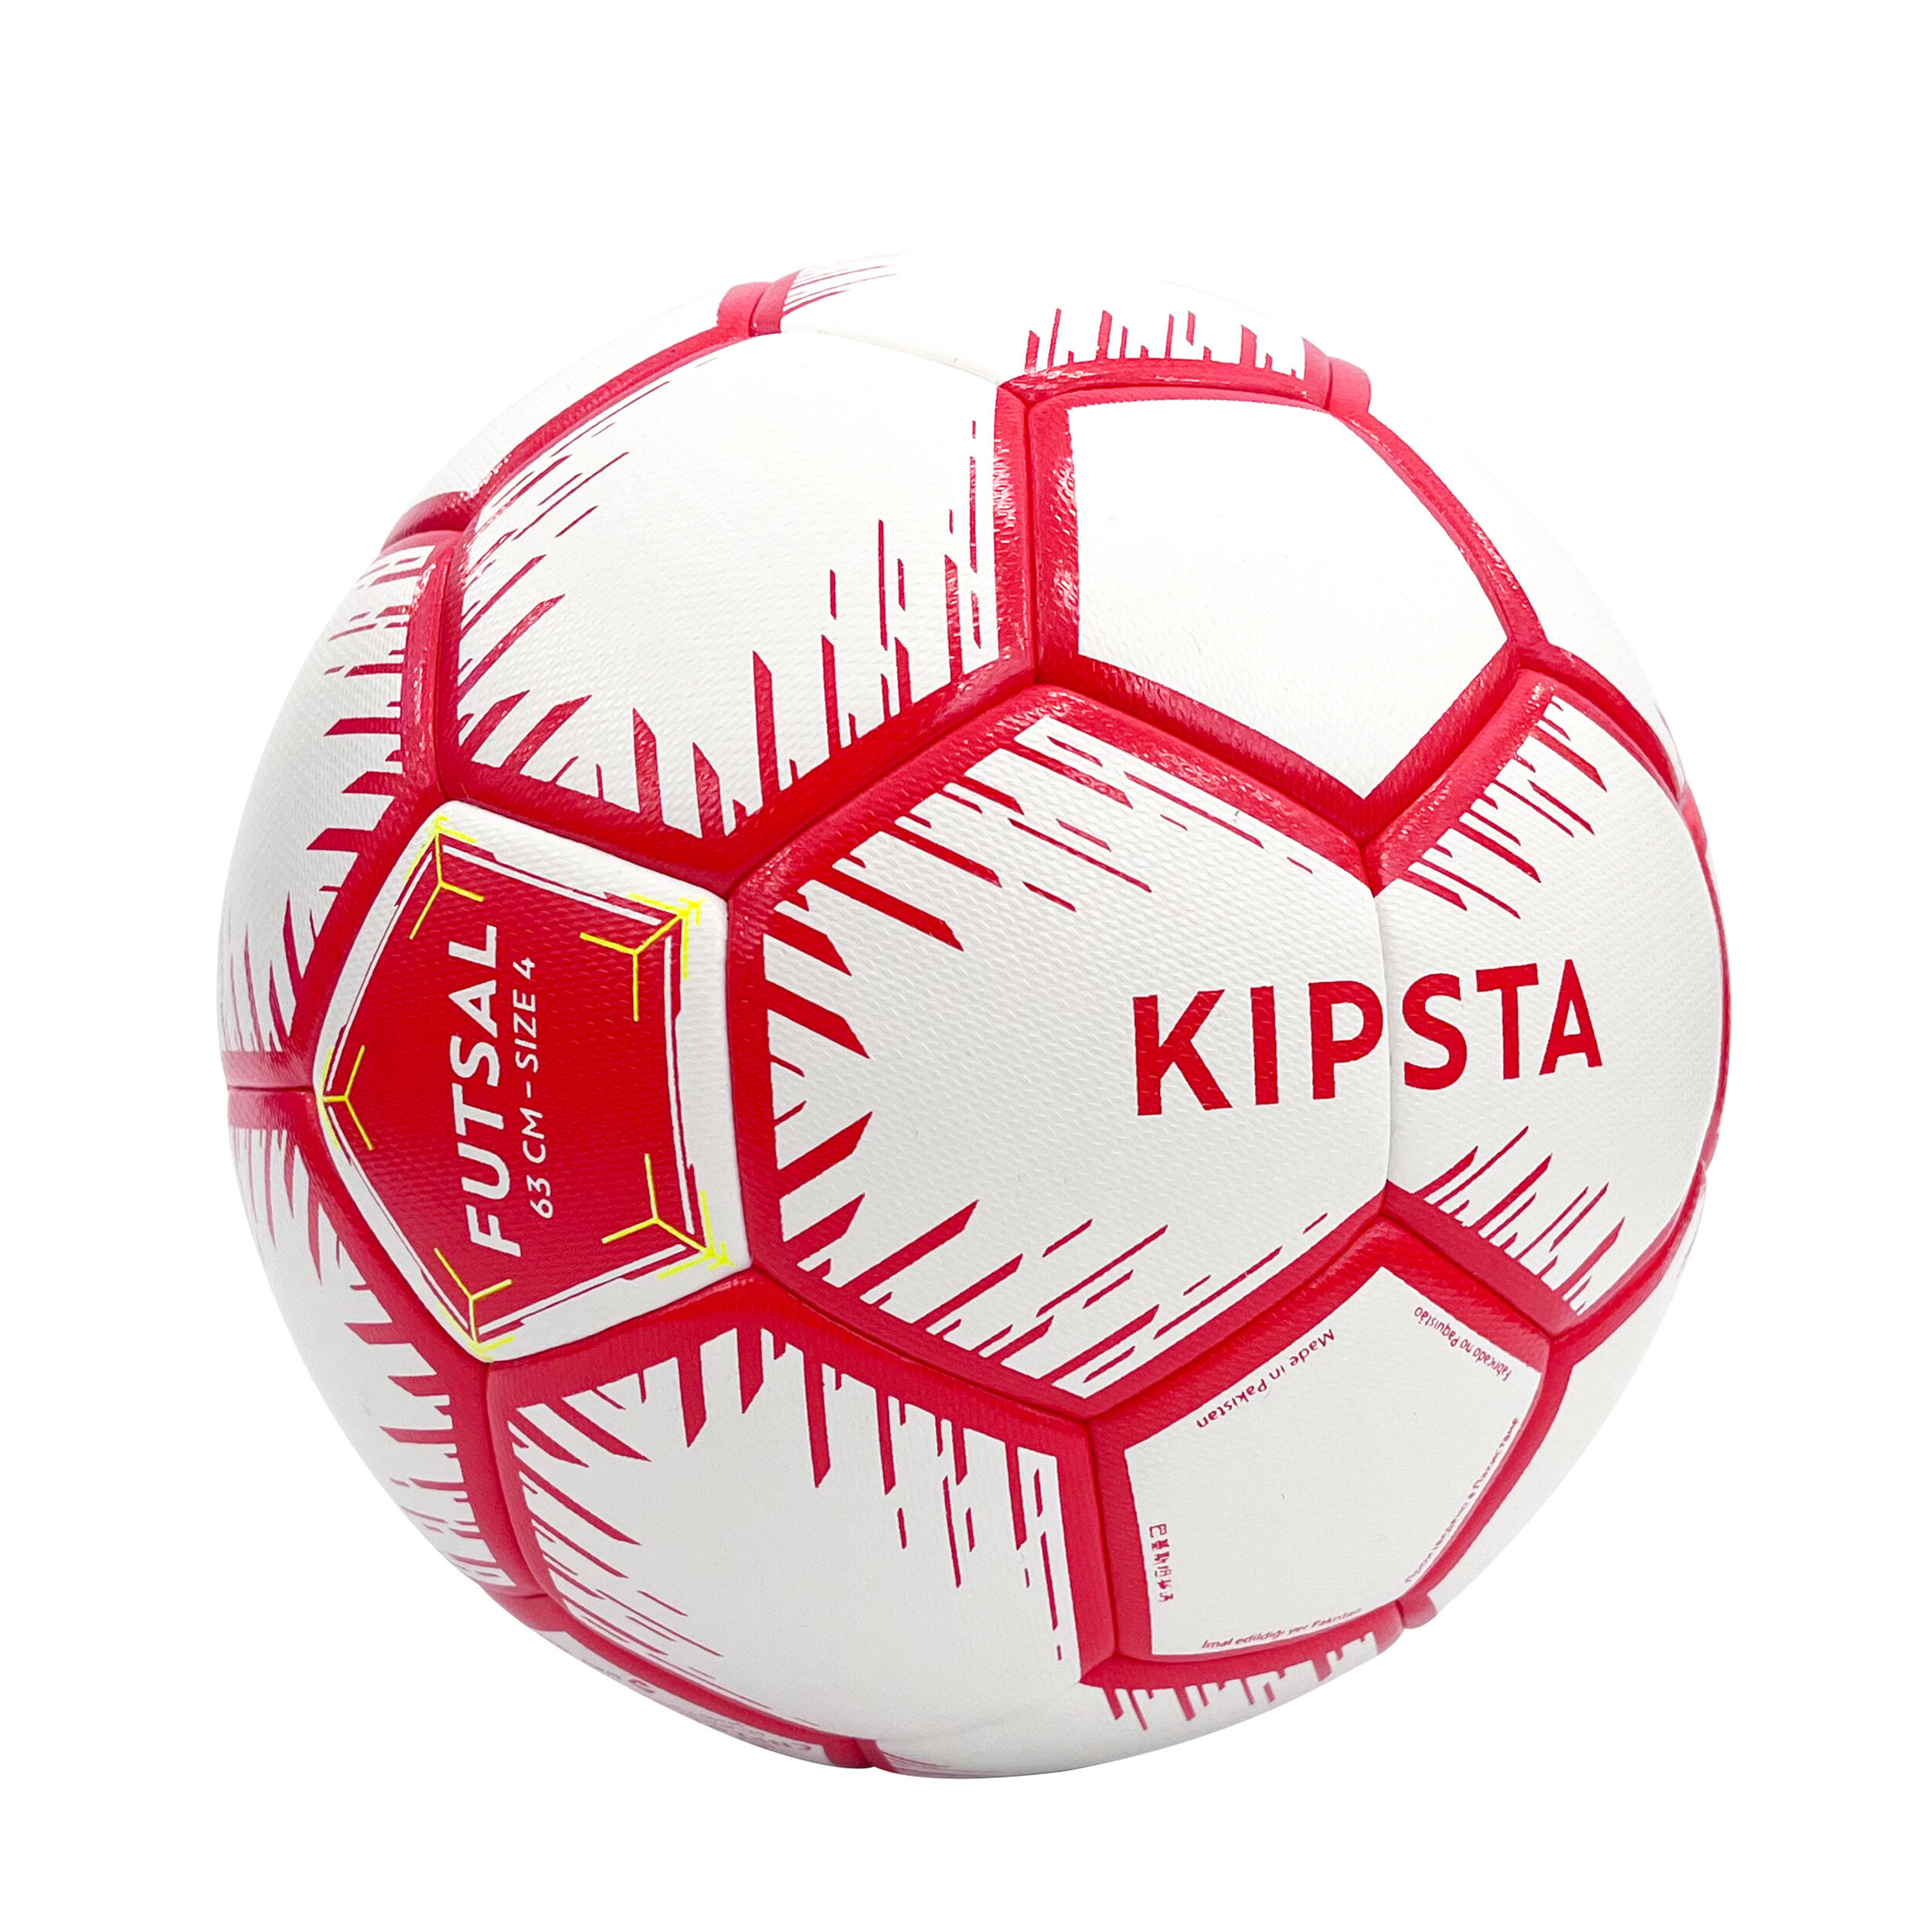 KIPSTA Size 4 Futsal Ball (63 cm Perimeter) - Red/White